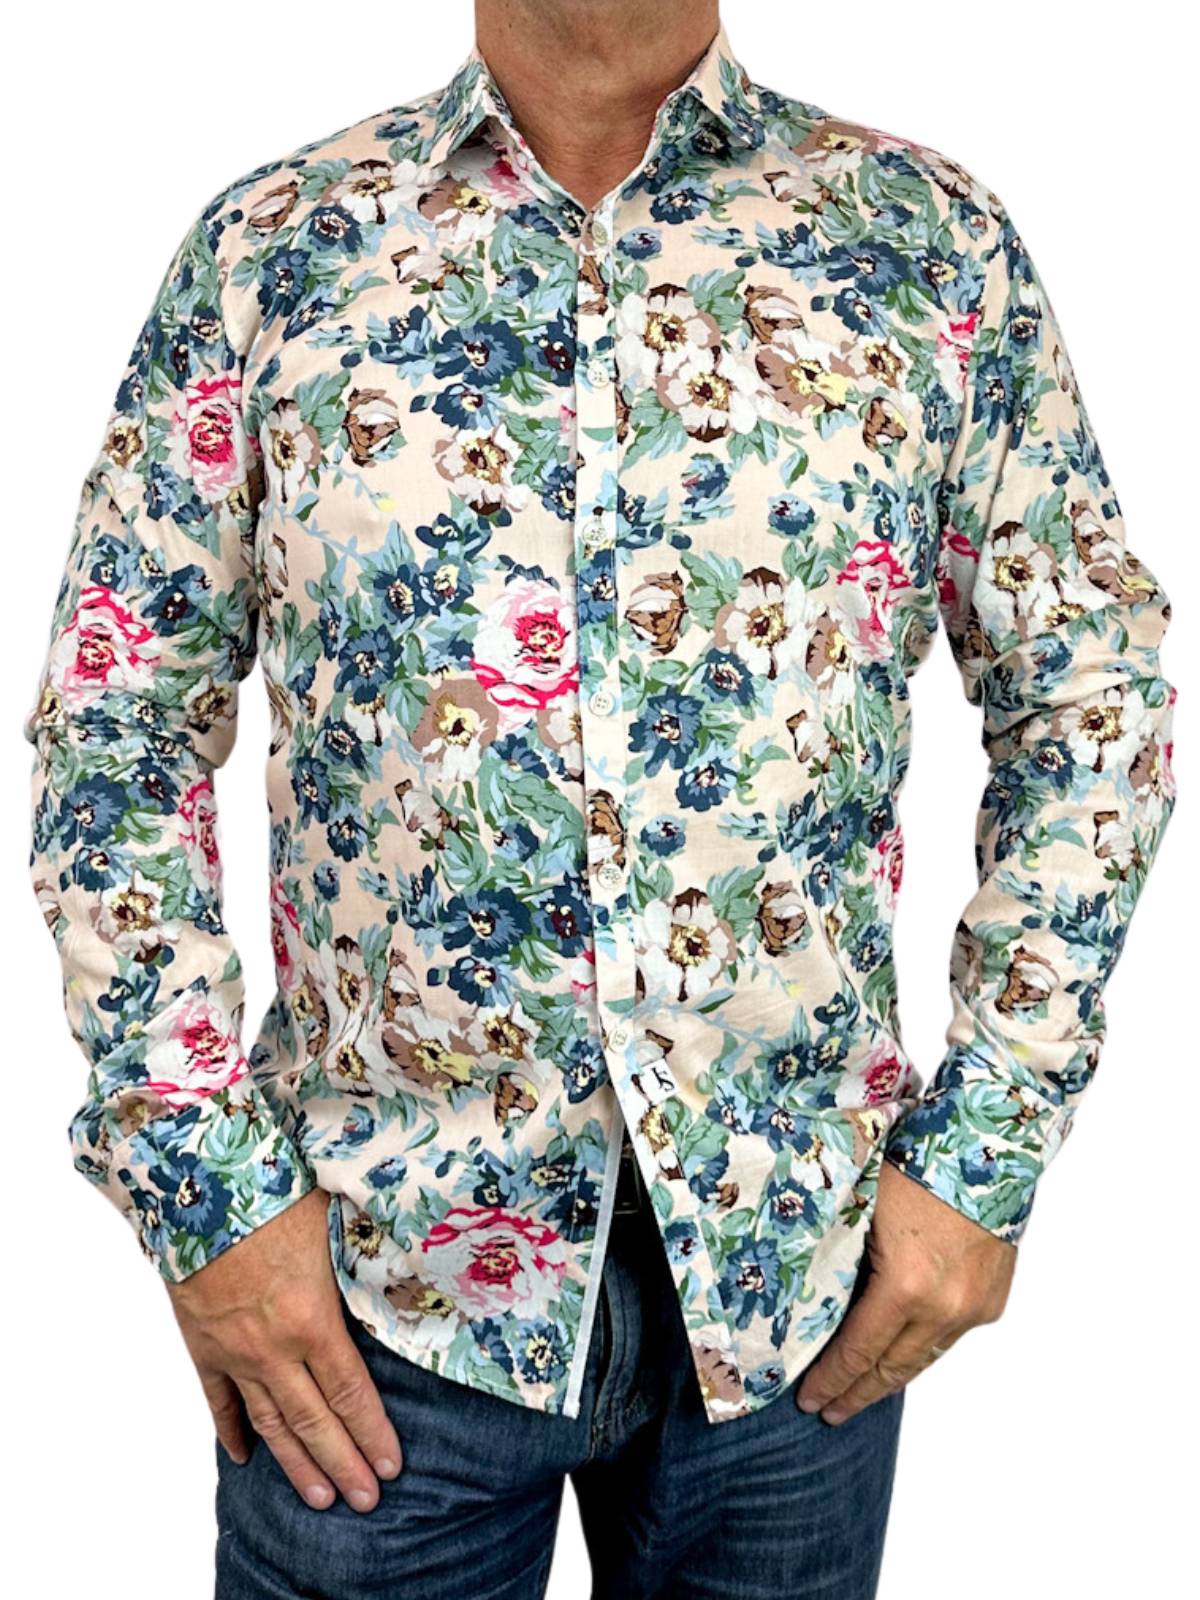 Kahlo Floral Cotton L/S Shirt - Pink/Green